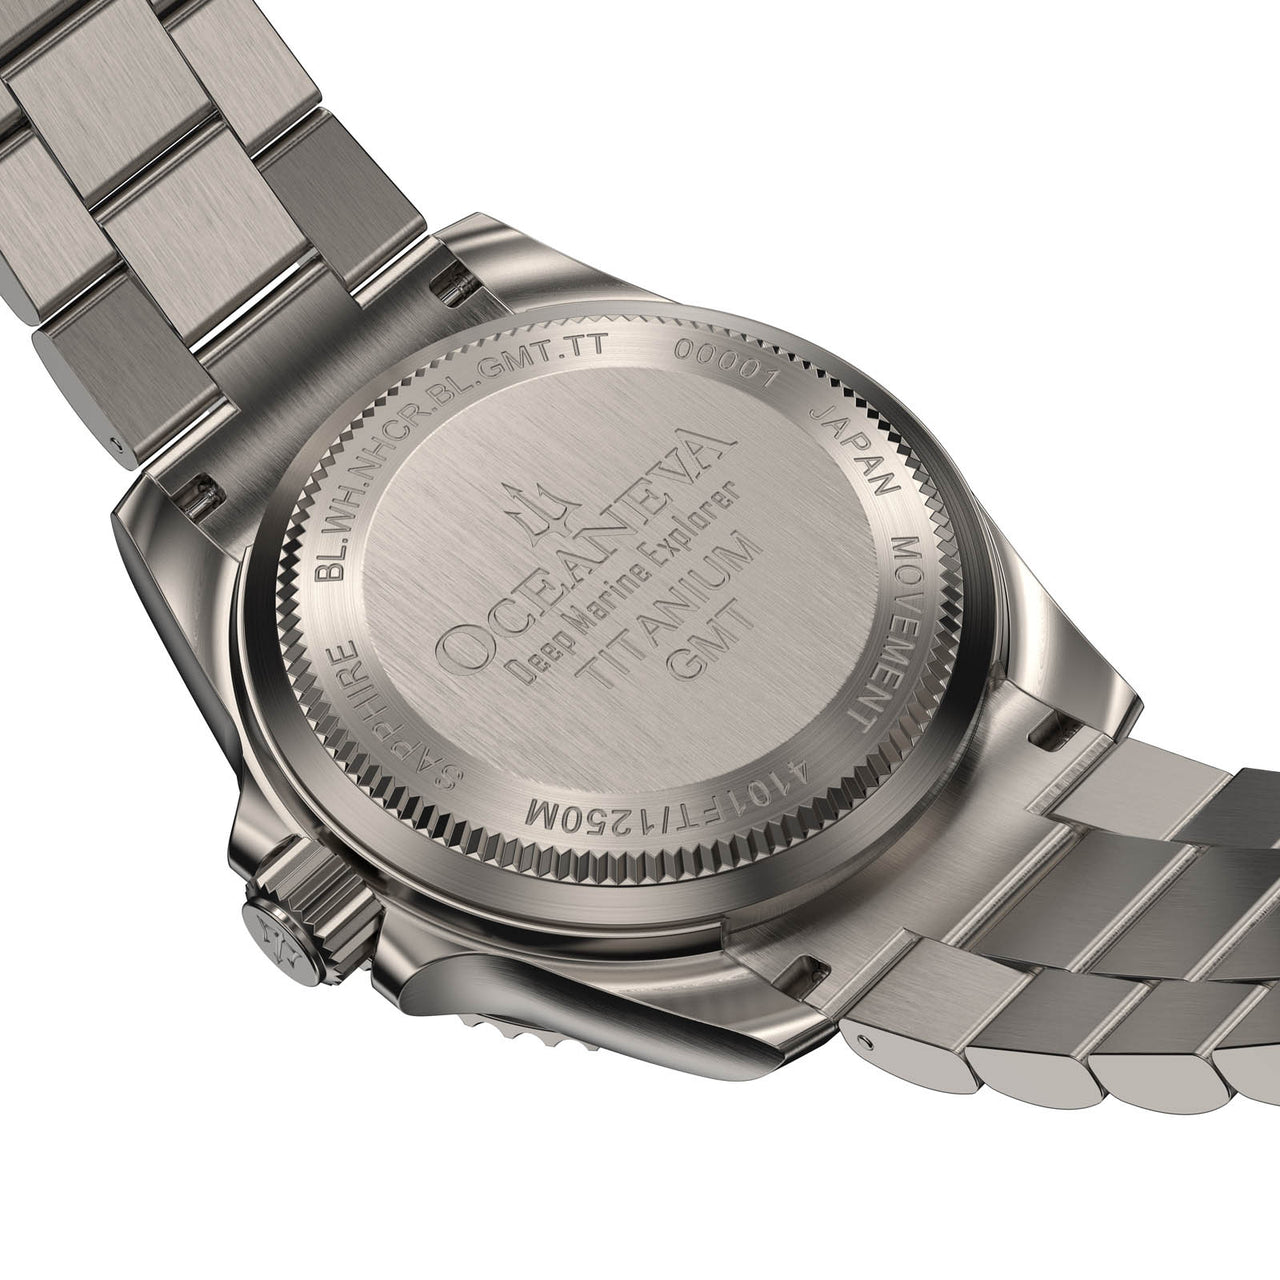 Exclusive Oceaneva Titanium Watch showcasing individual serial number on caseback